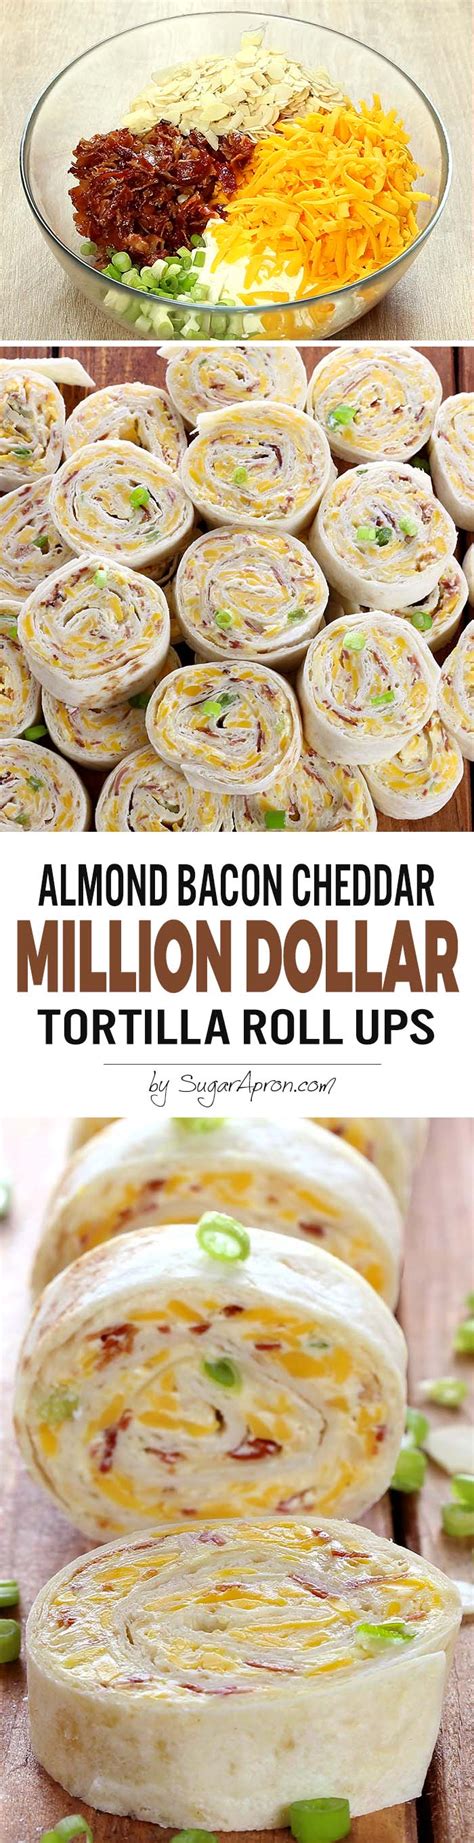 Million Dollar Tortilla Roll Ups Sugar Apron